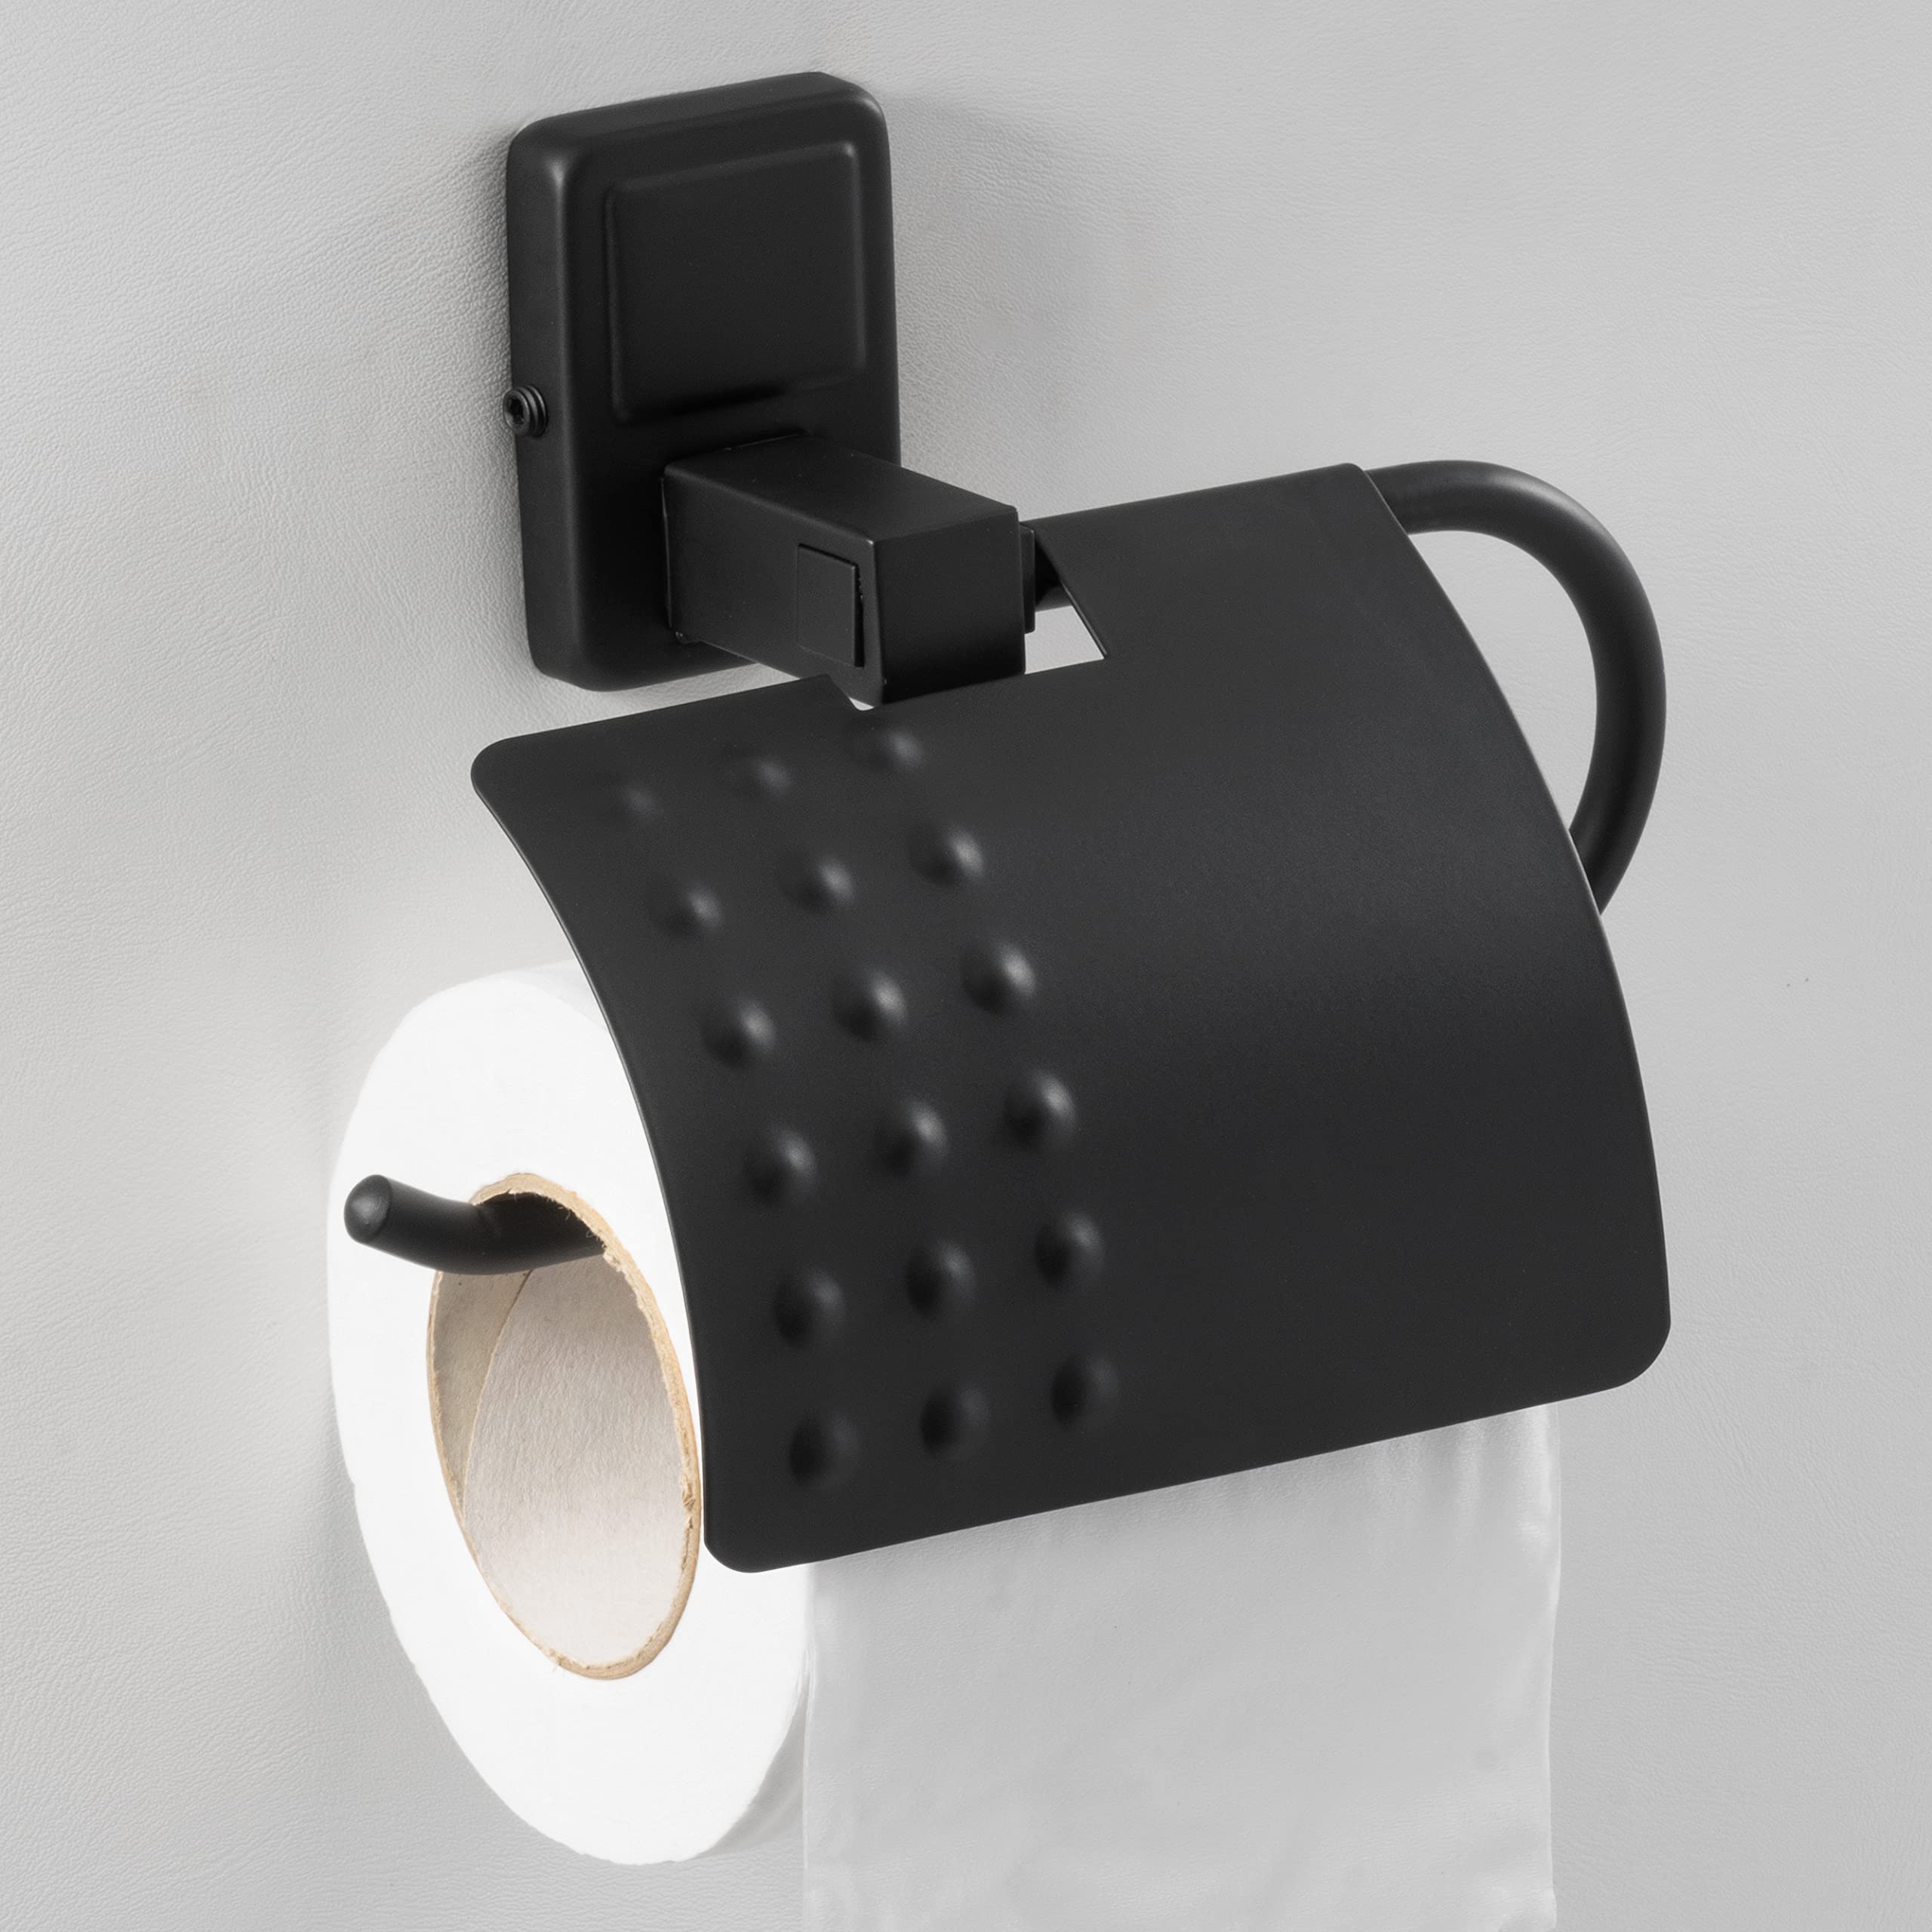 Plantex Darcy Stainless Steel 304 Grade Toilet Paper Roll Holder/Toilet Paper Holder for Bathroom/Kitchen/Bathroom Accessories (Black)